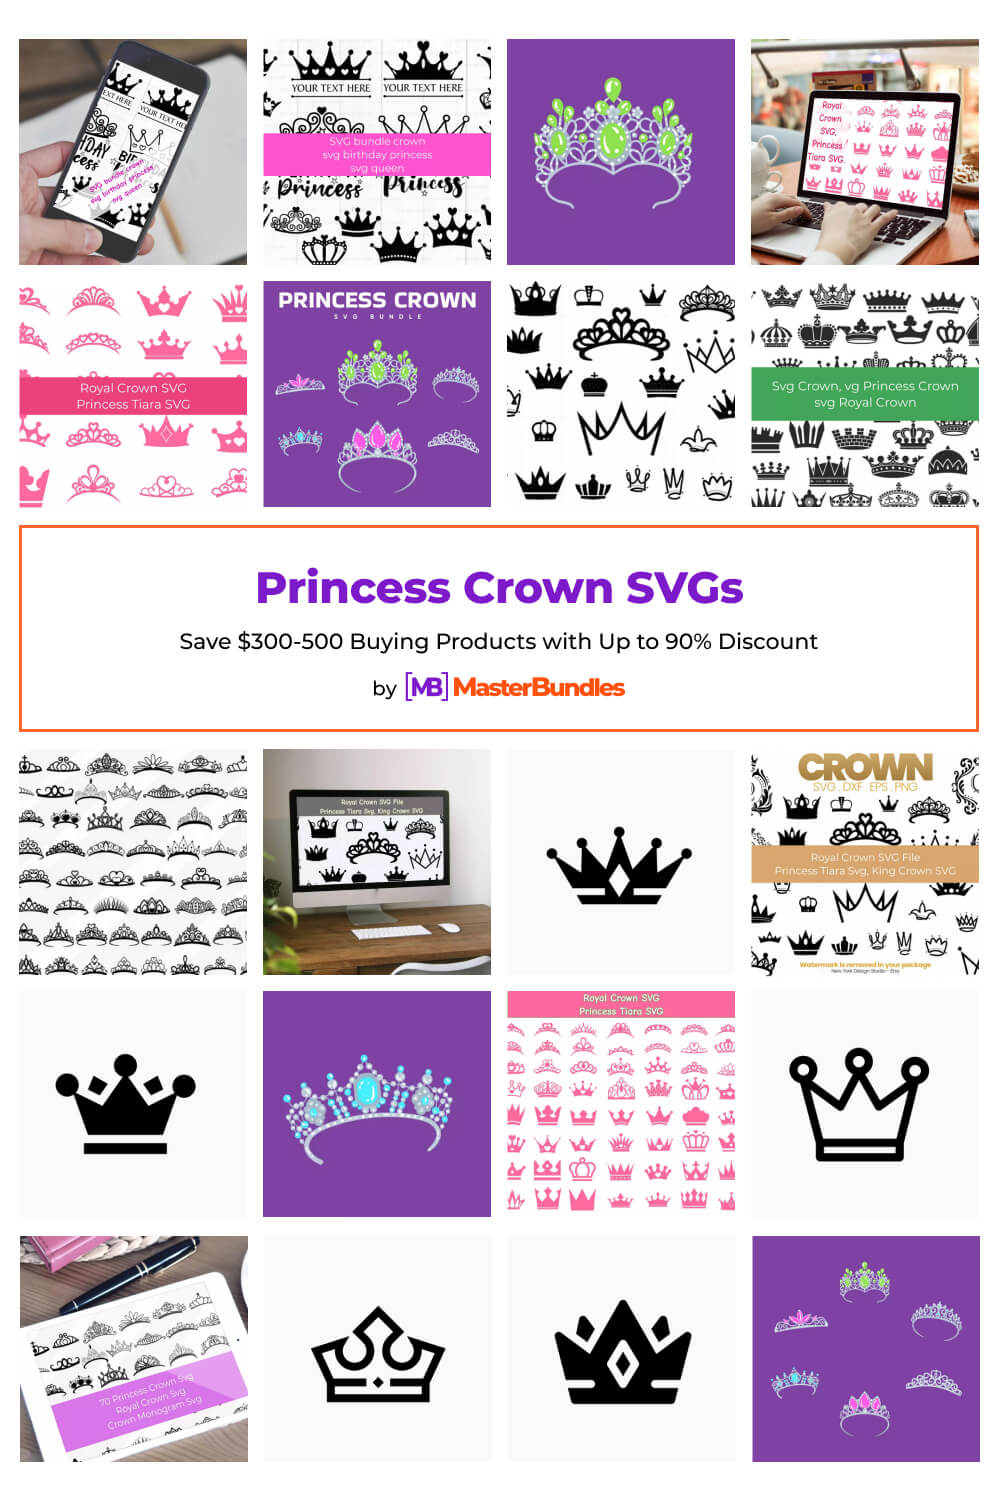 princess crown svgs pinterest image.